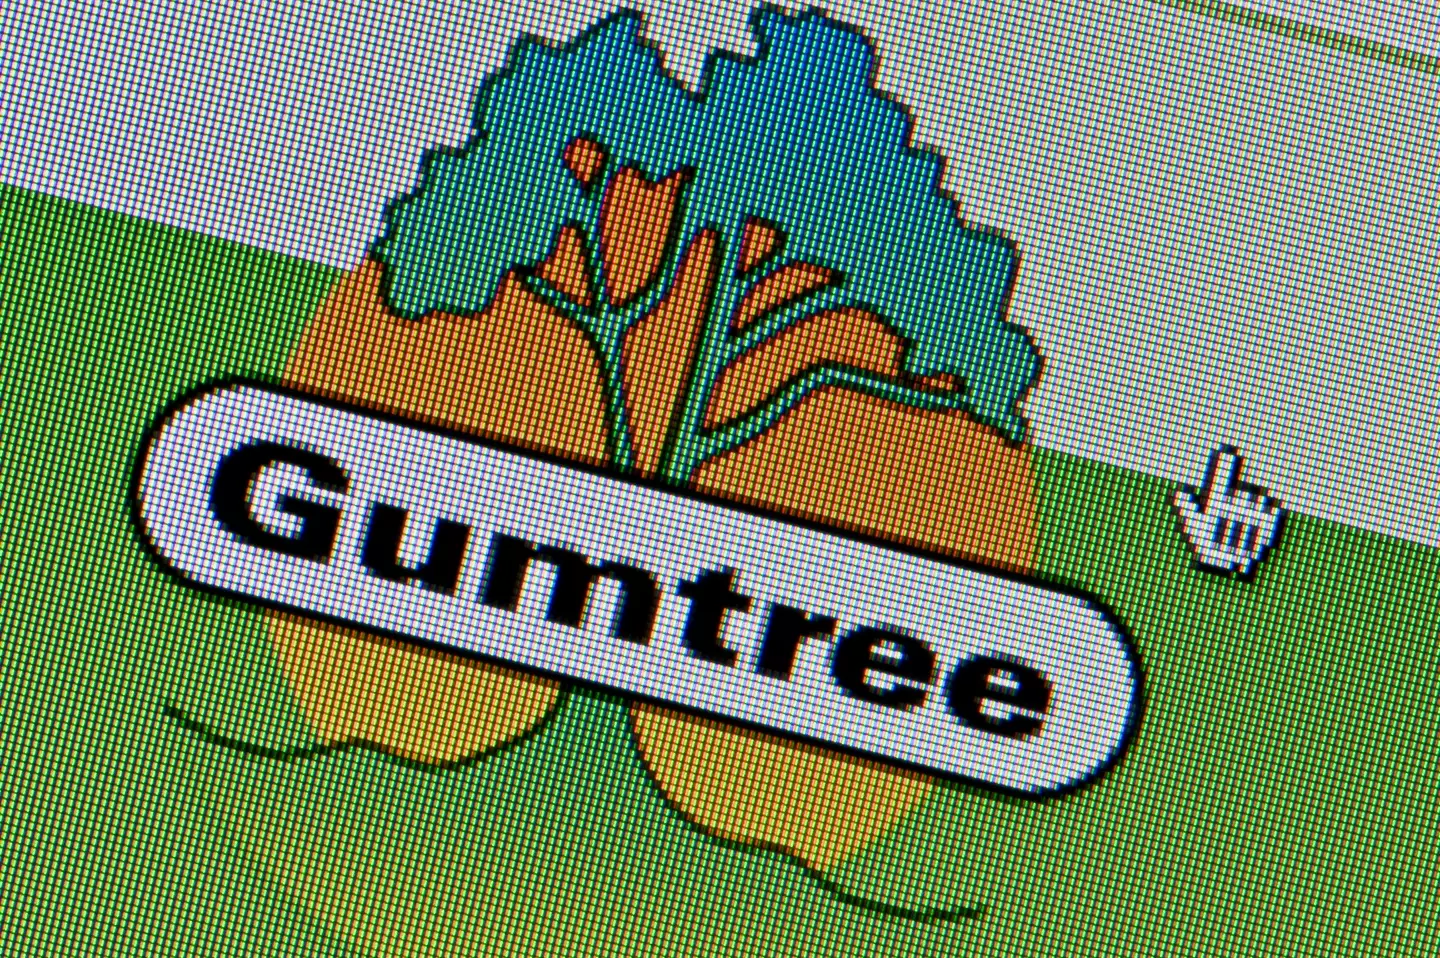 Poppy found the ad on Gumtree (